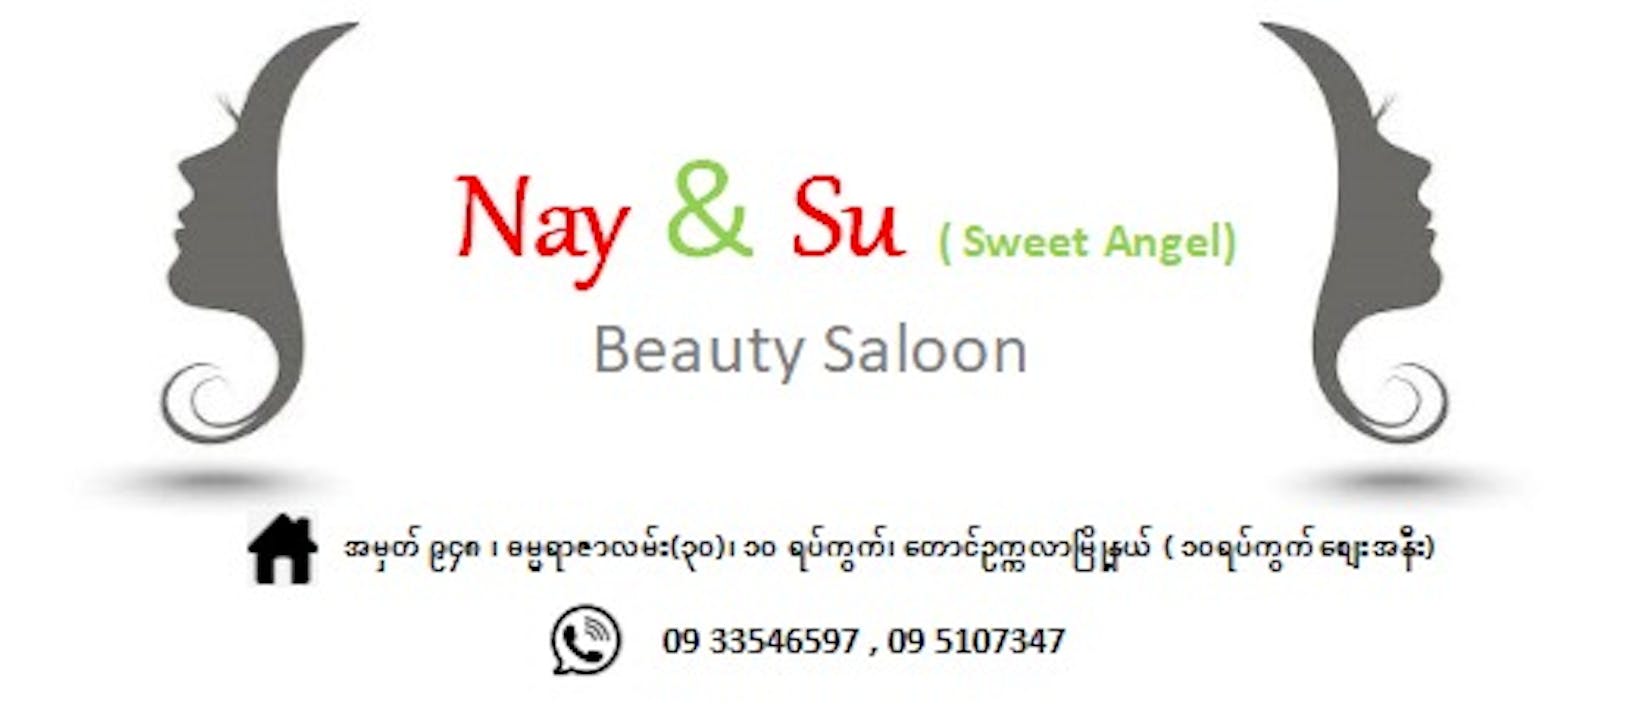 Nay & Su | Beauty